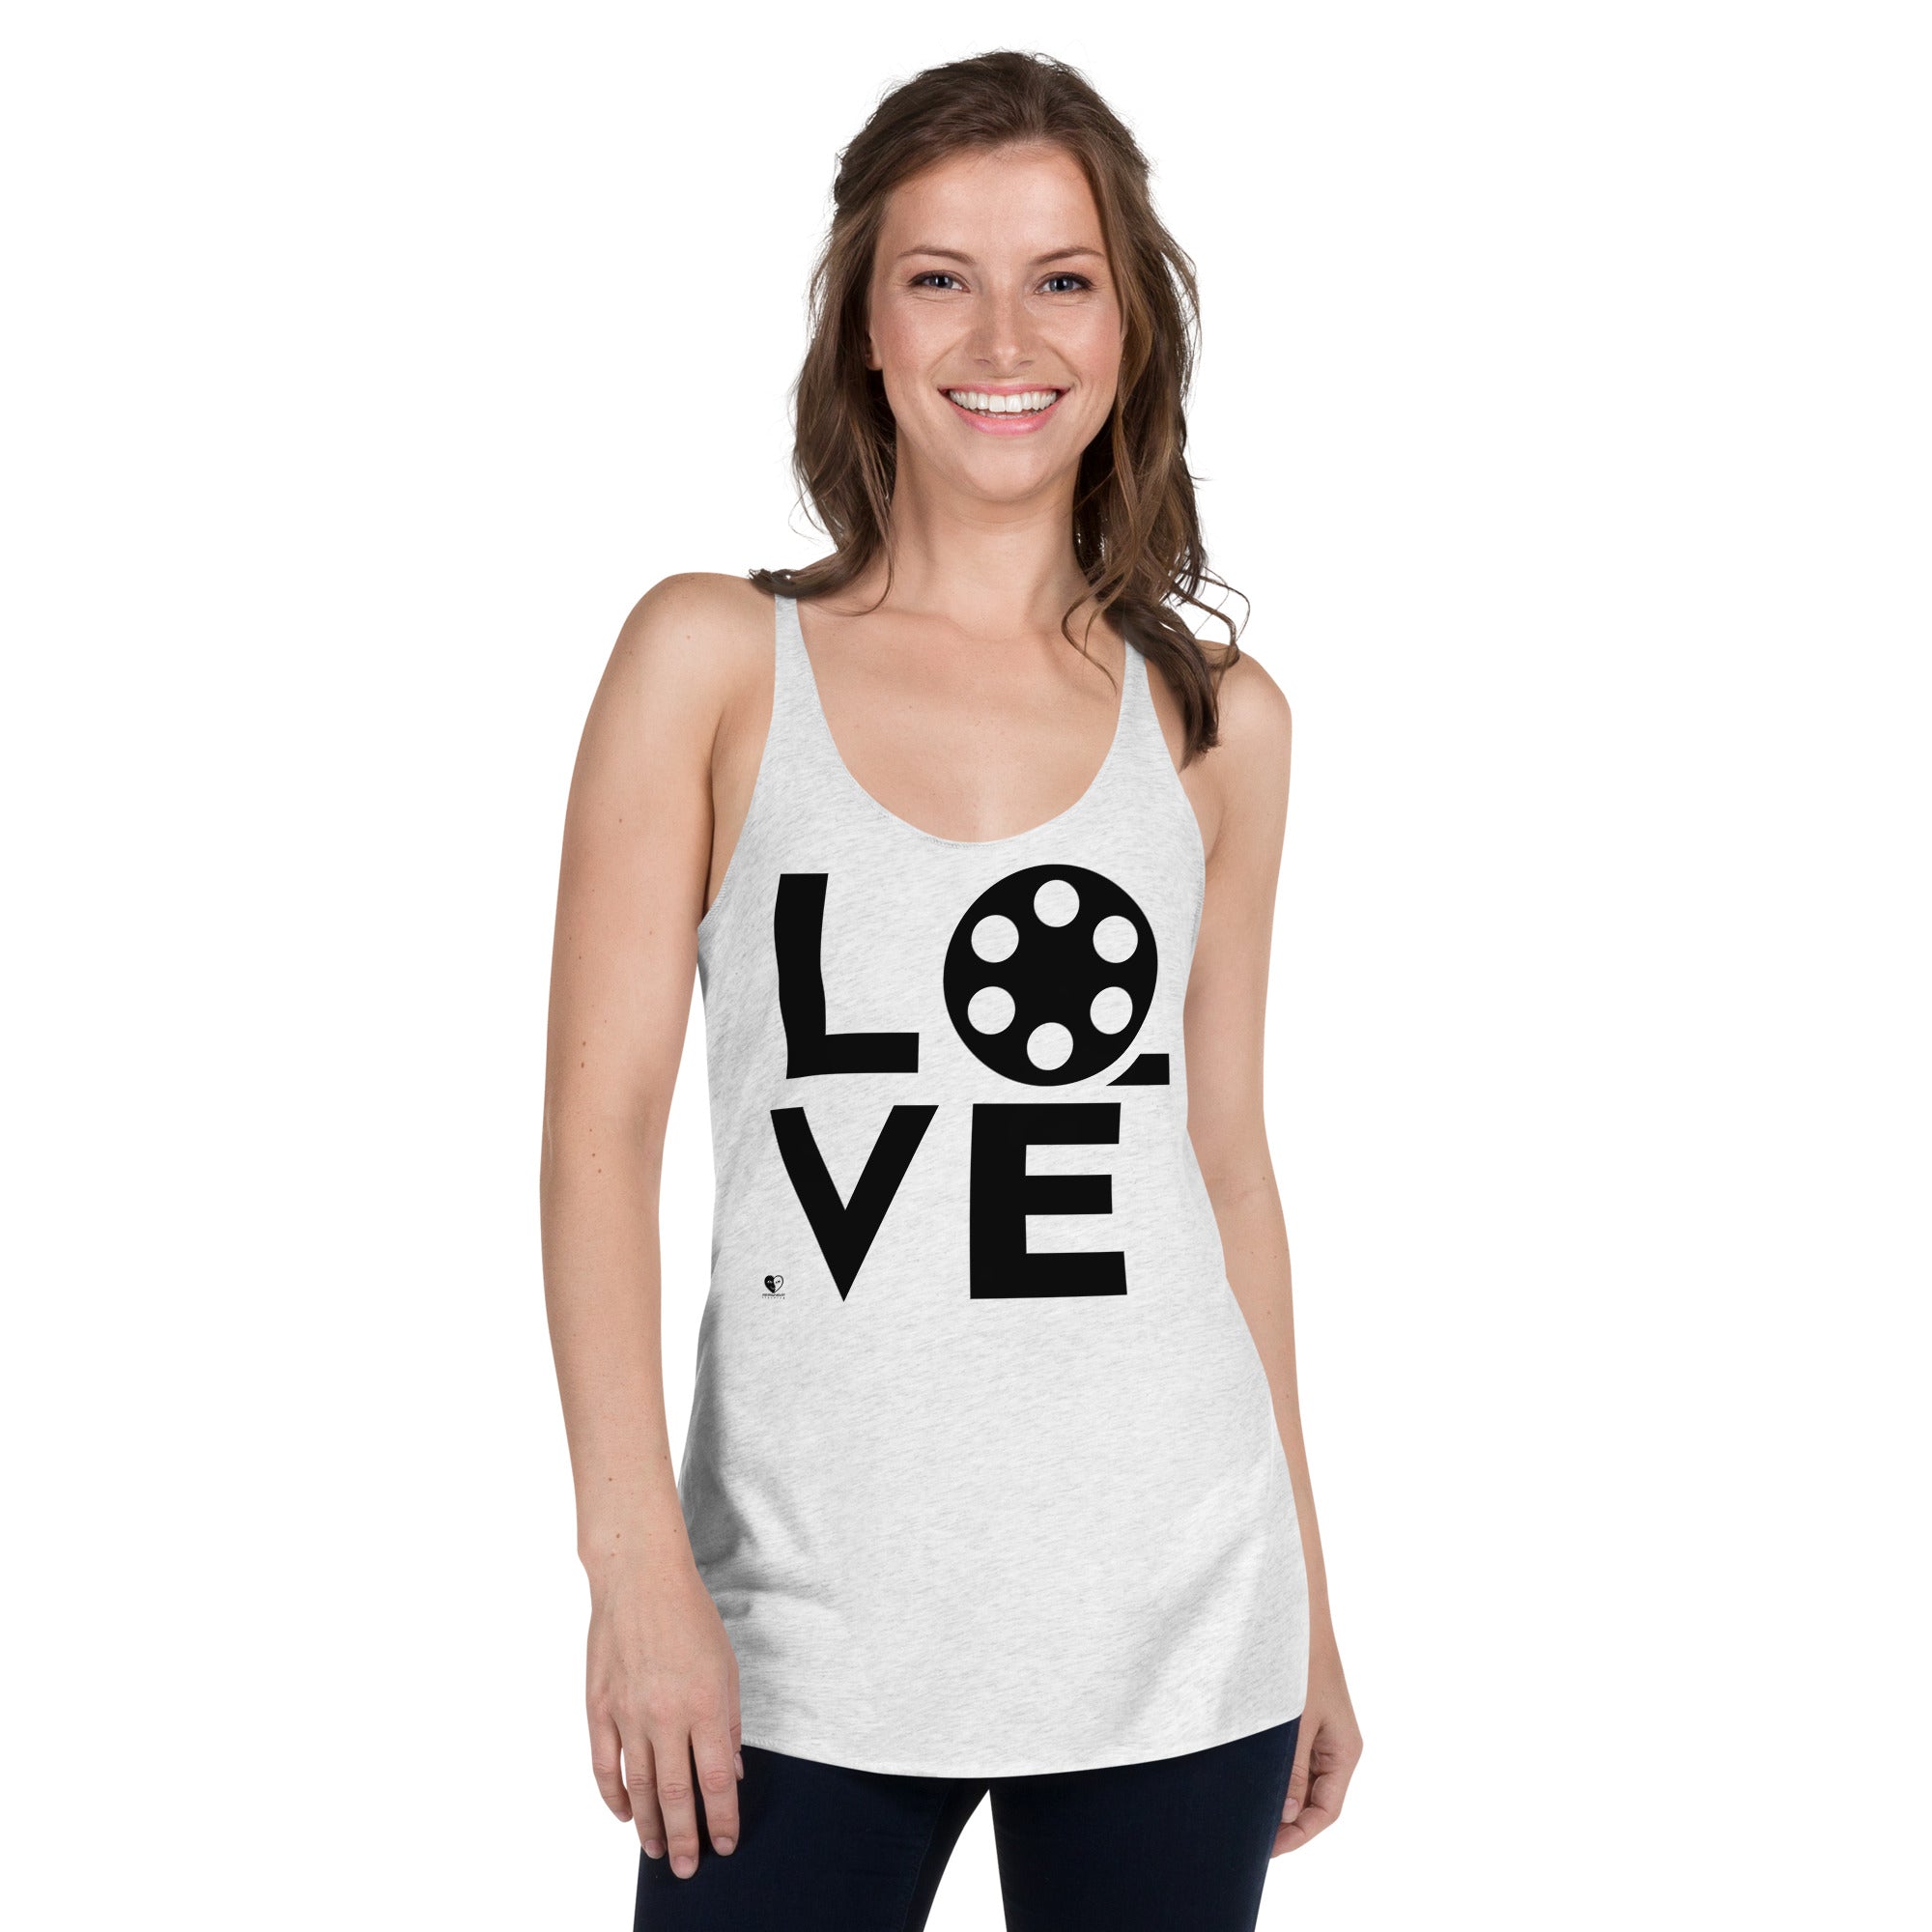 Love Movies - Women's Racerback Tank Top